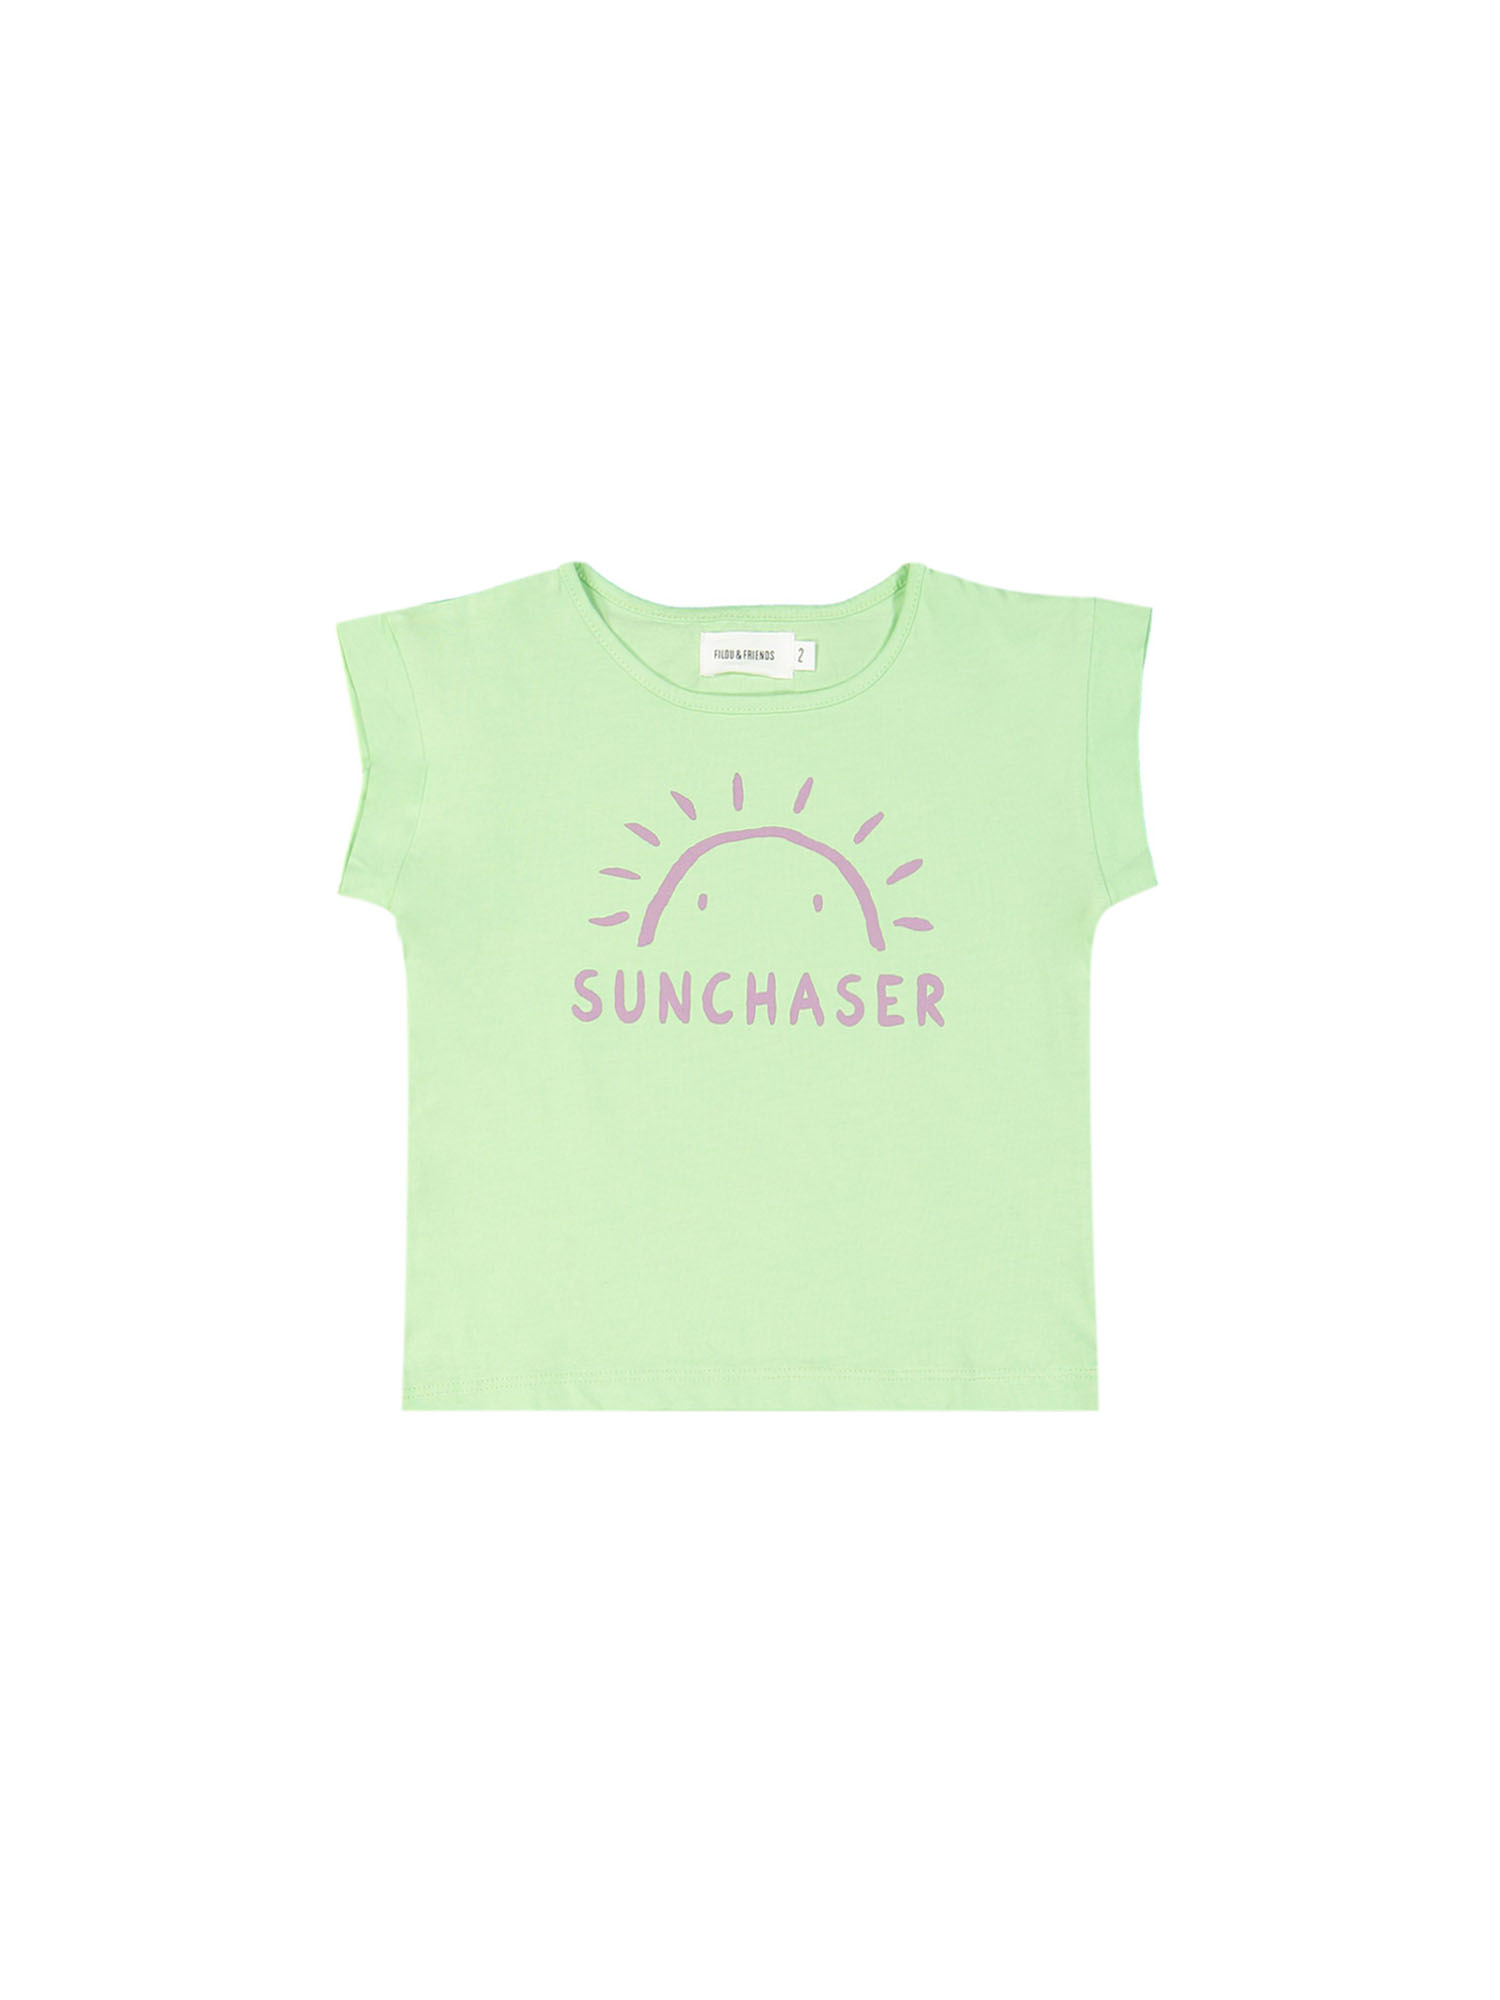 t-shirt sunchaser pistachio